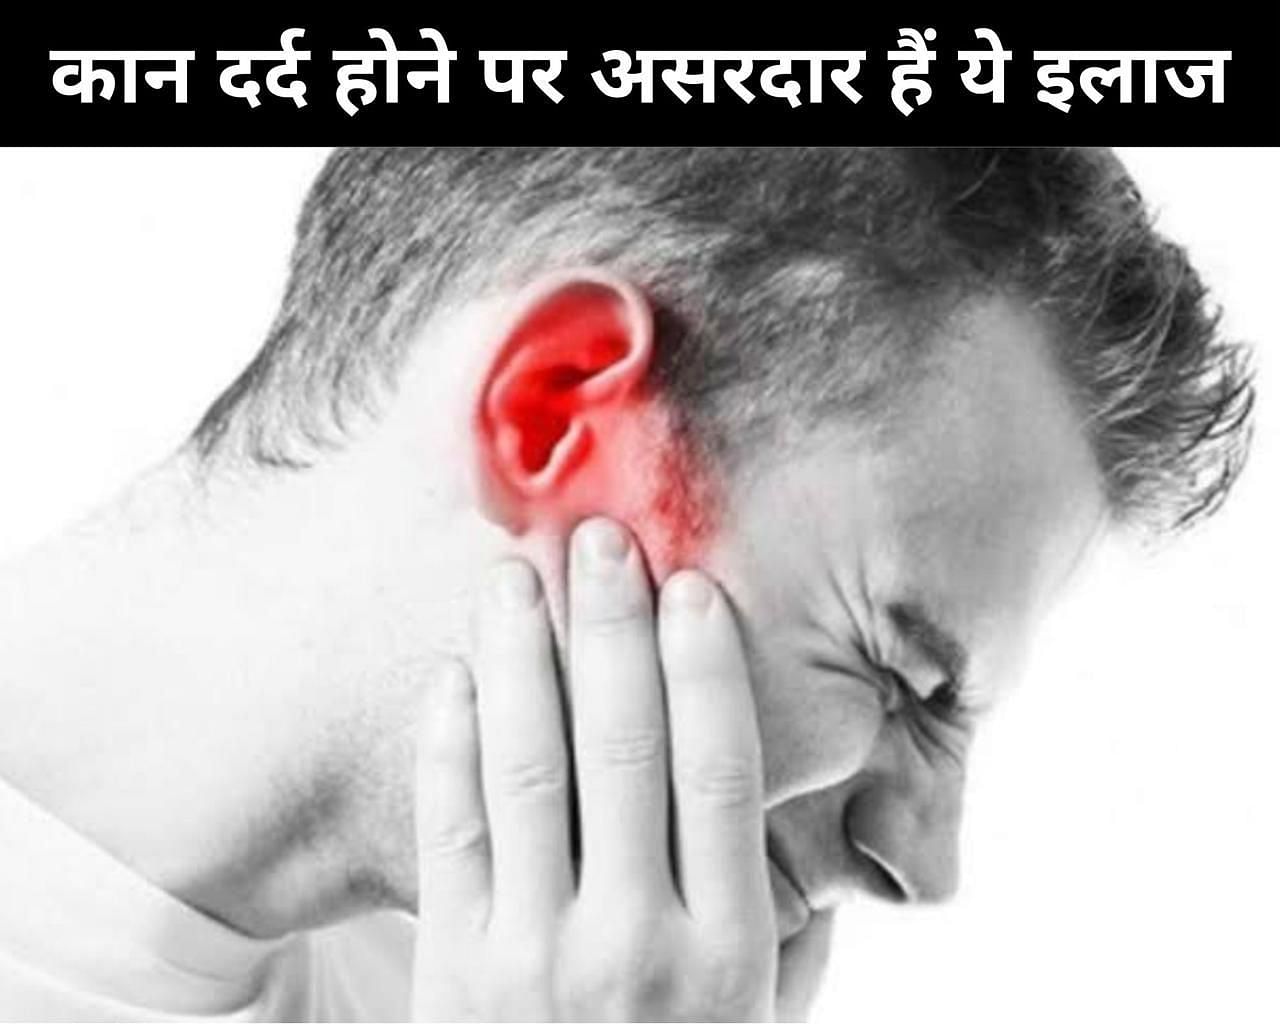 कान दर्द होने पर असरदार हैं ये 5 इलाज (फोटो - sportskeedaहिन्दी)